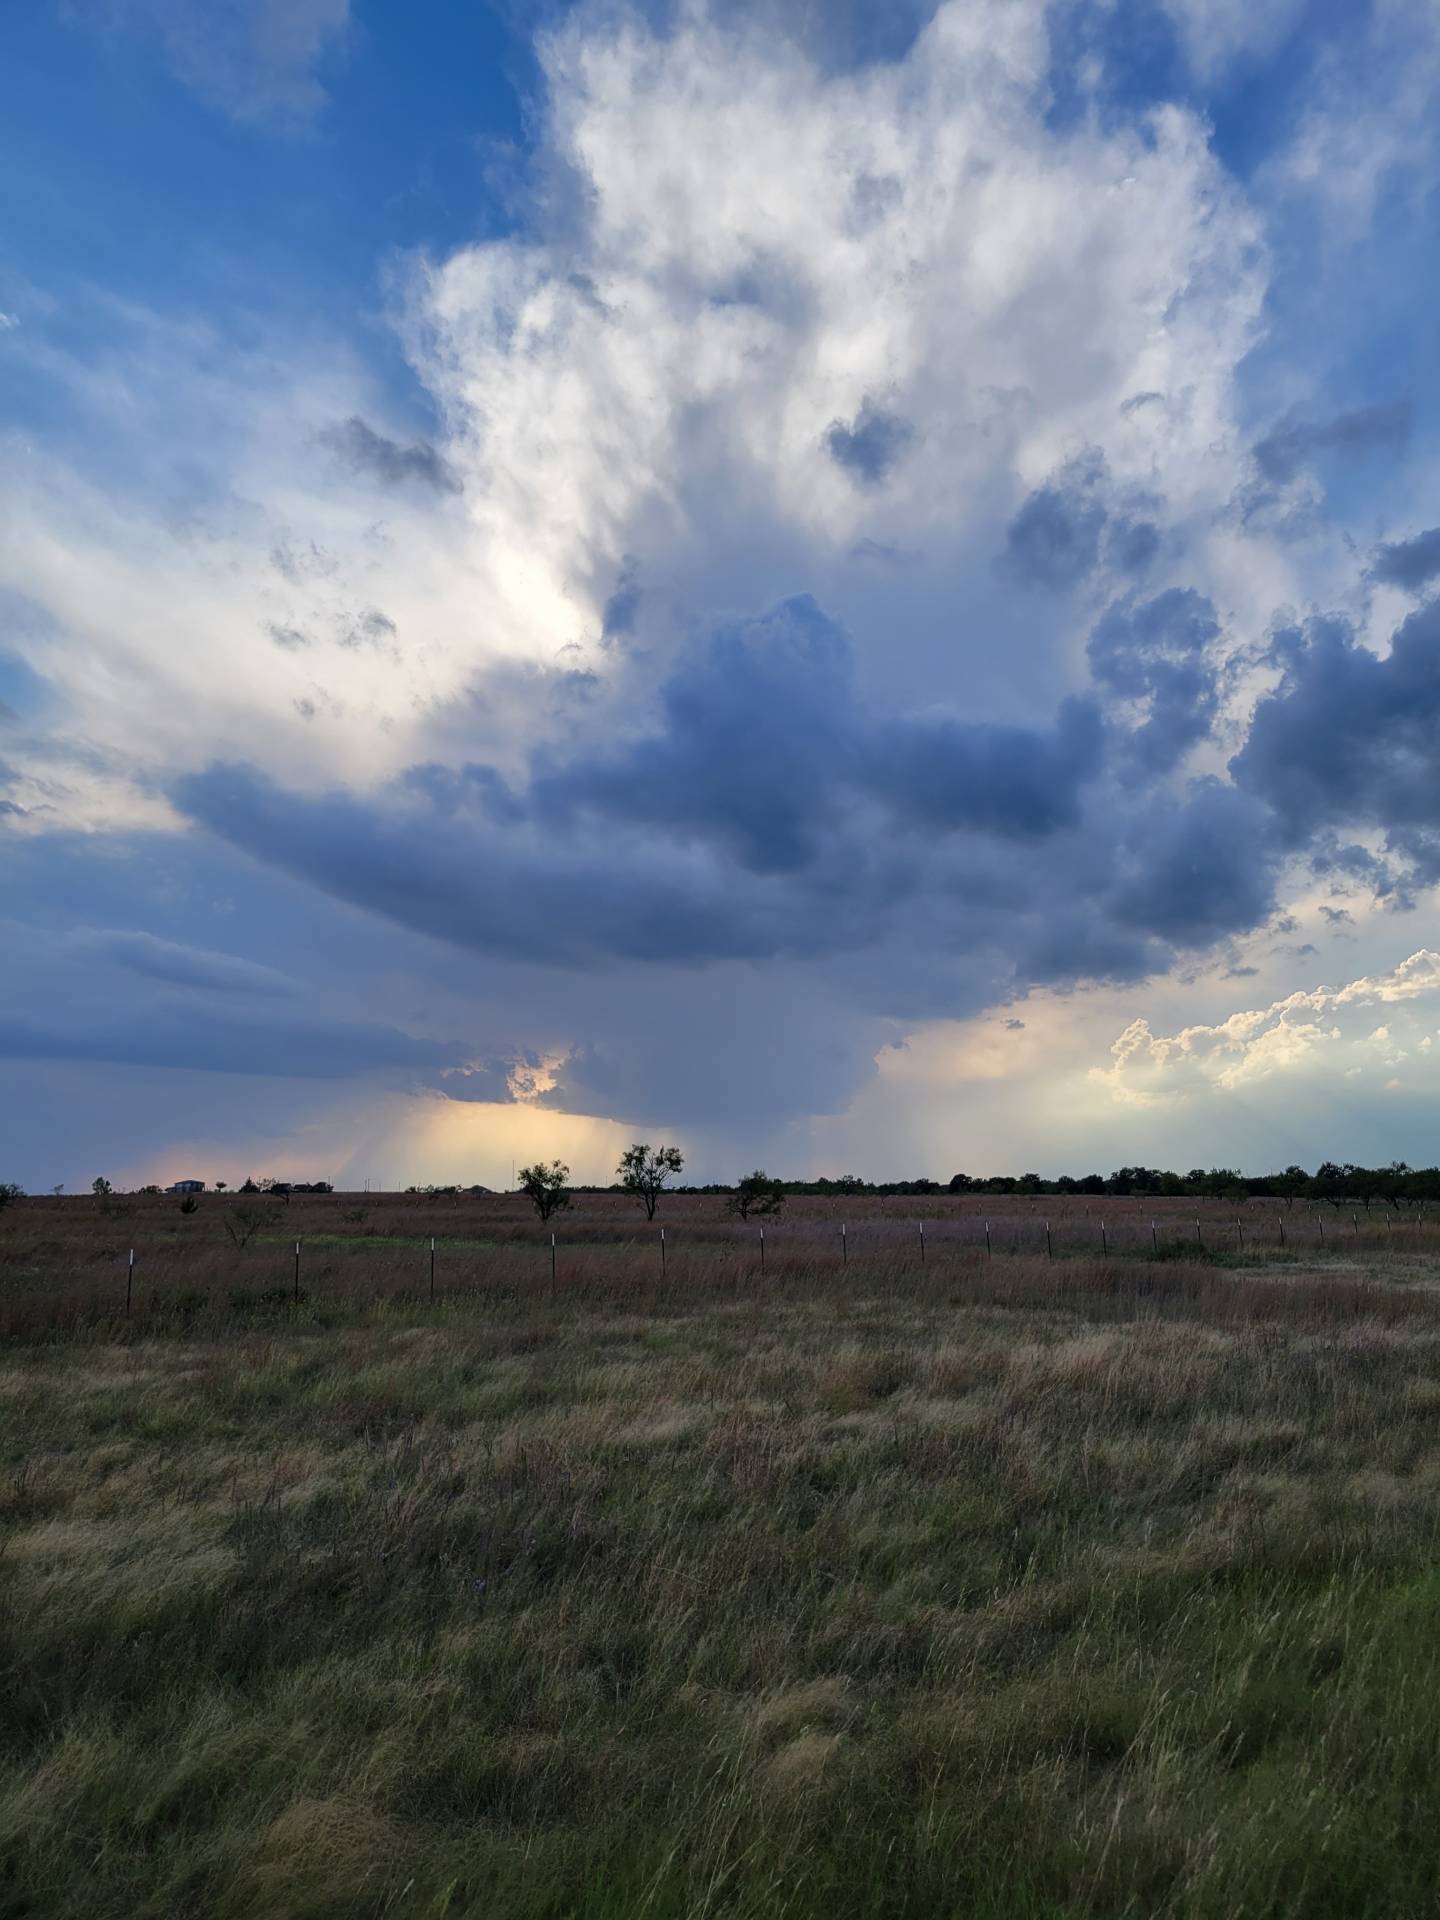 Storm intensifying southwest of Cache, Oklahoma. #okwx